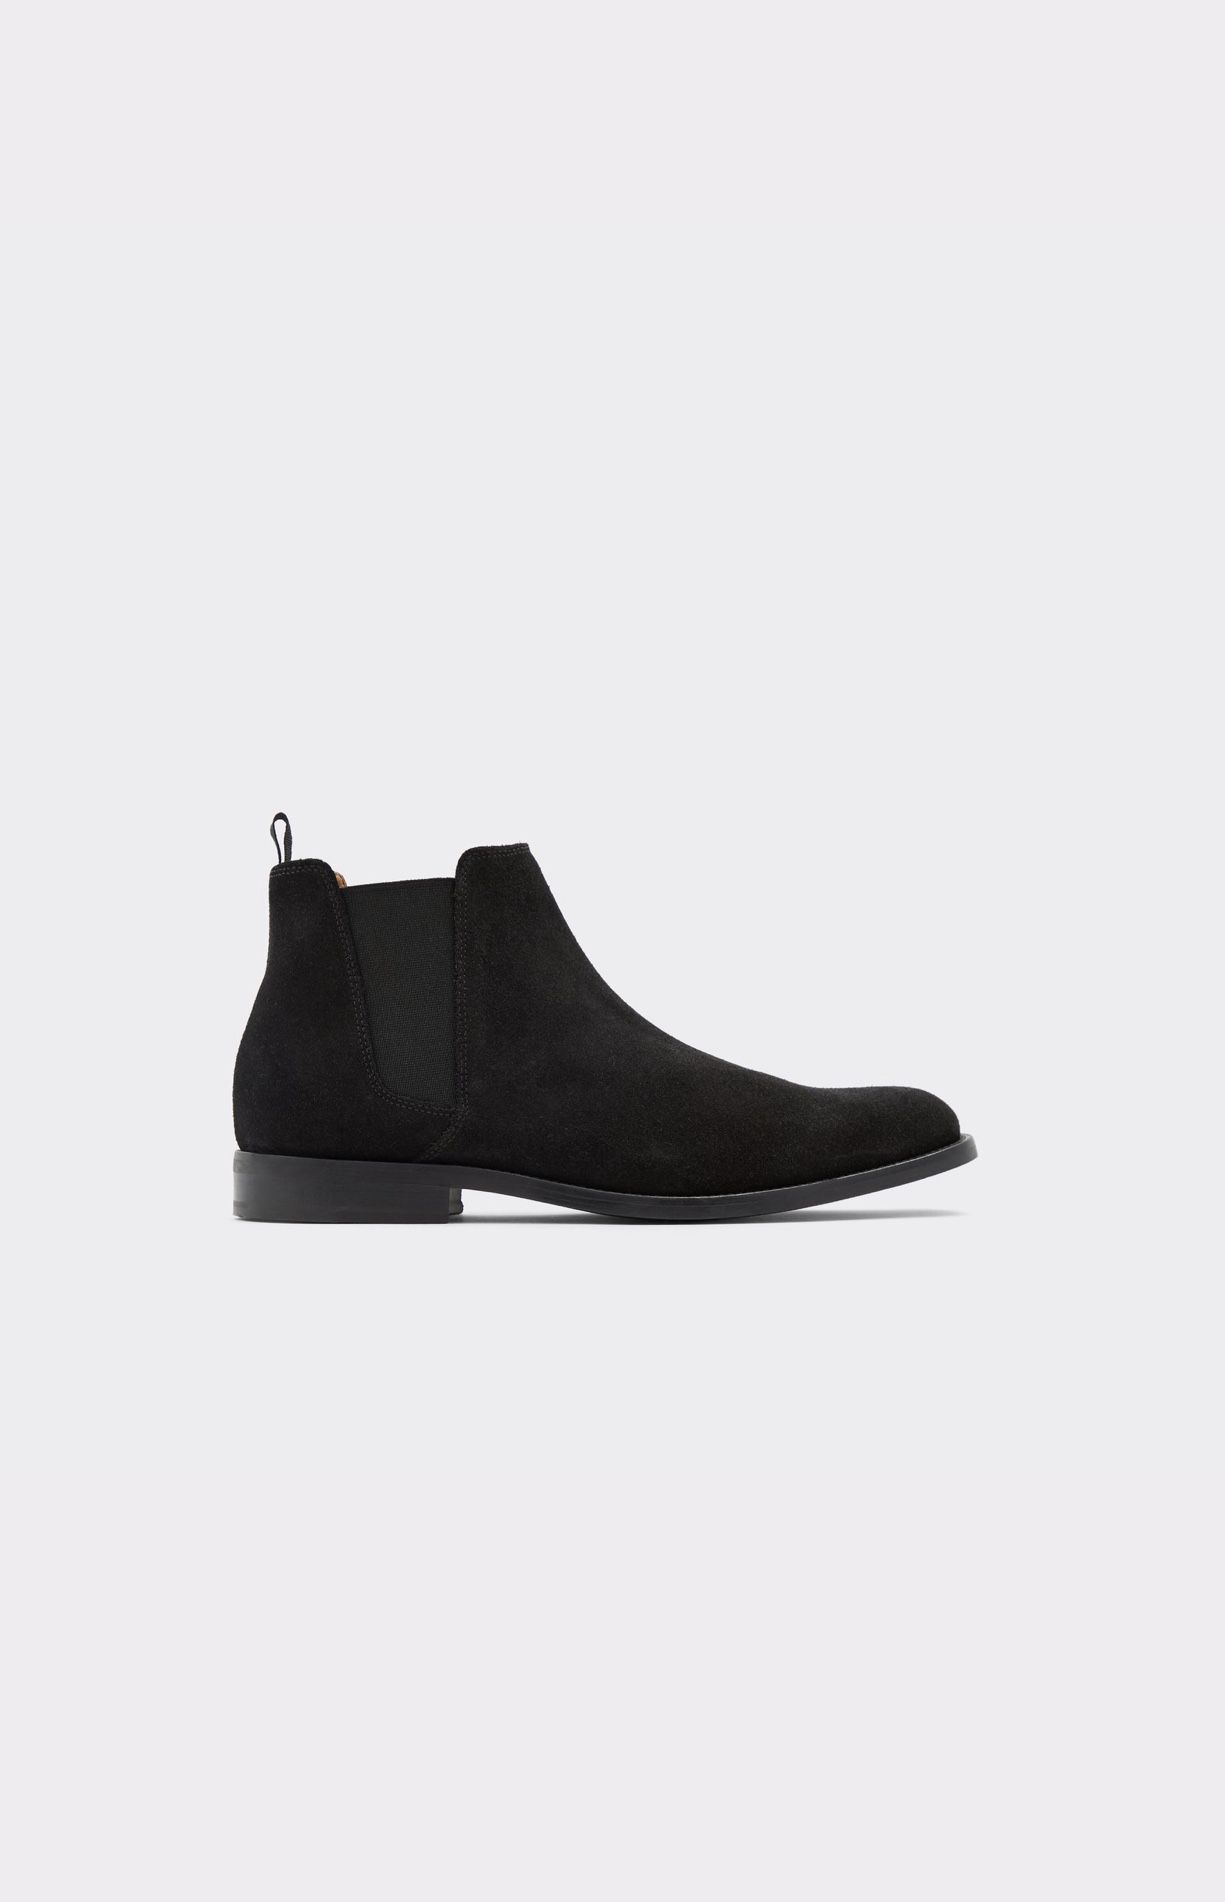 ALDO Men's Vianello Suede Chelsea Boots Black Size 12 (only worn once)